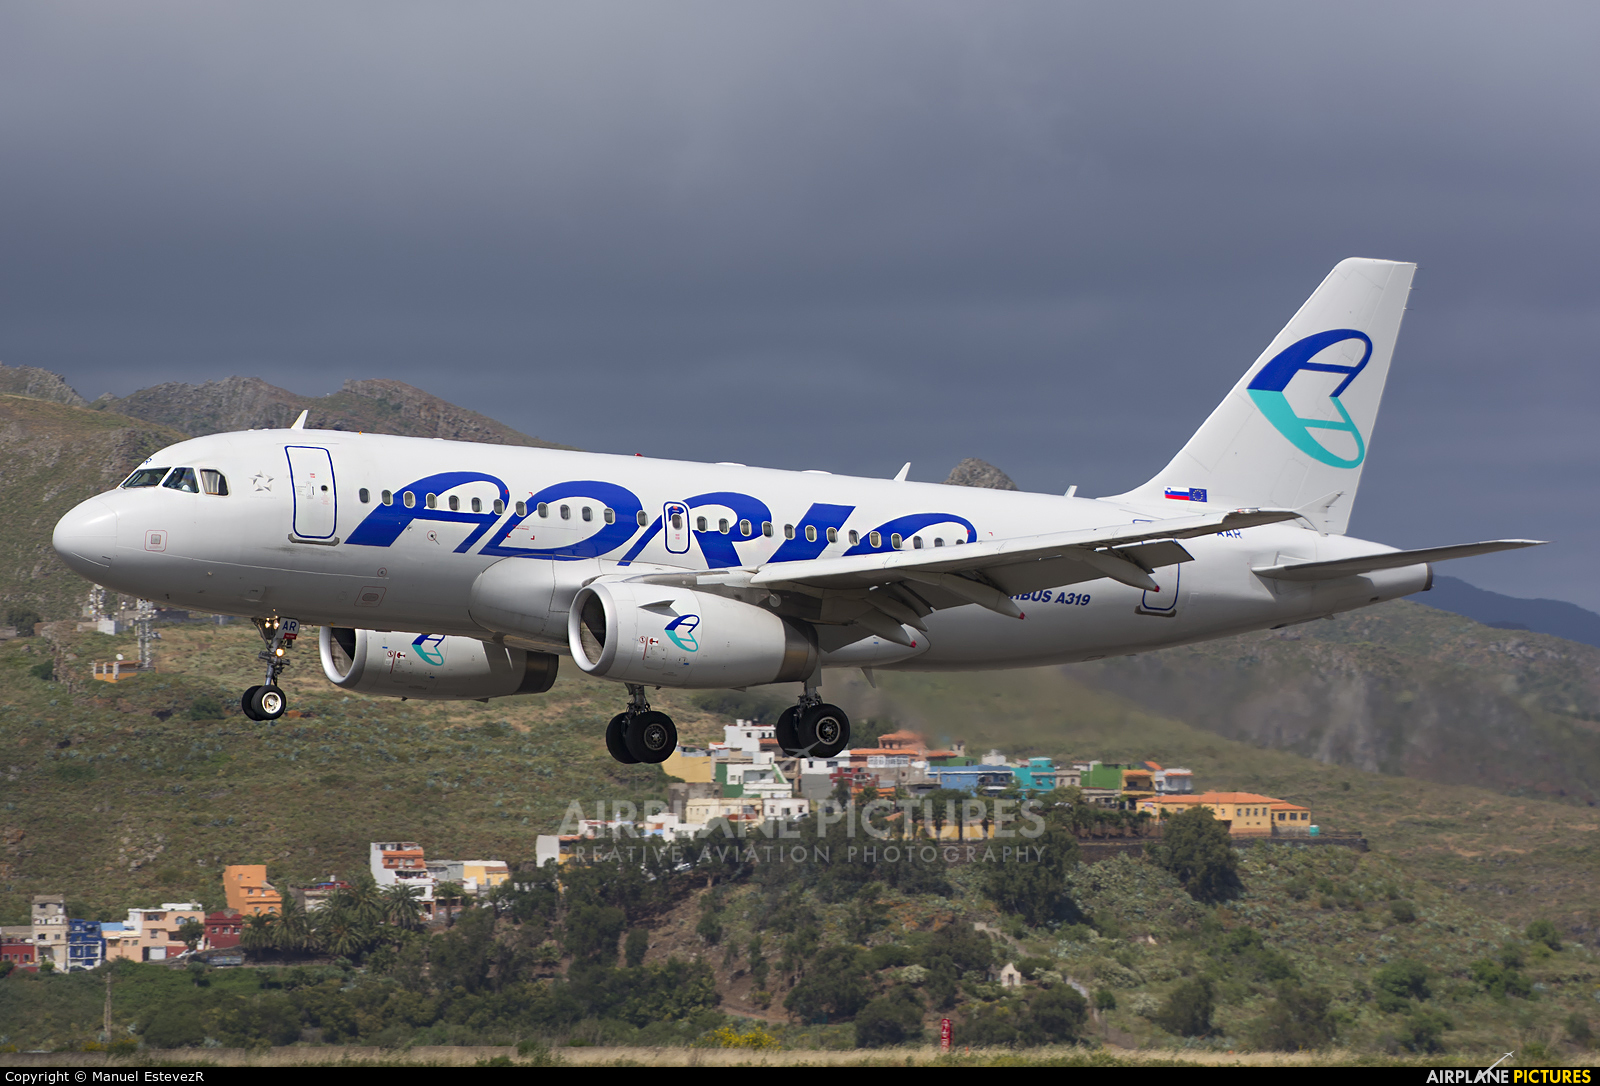 Adria Airways S5-AAR aircraft at Tenerife Norte - Los Rodeos